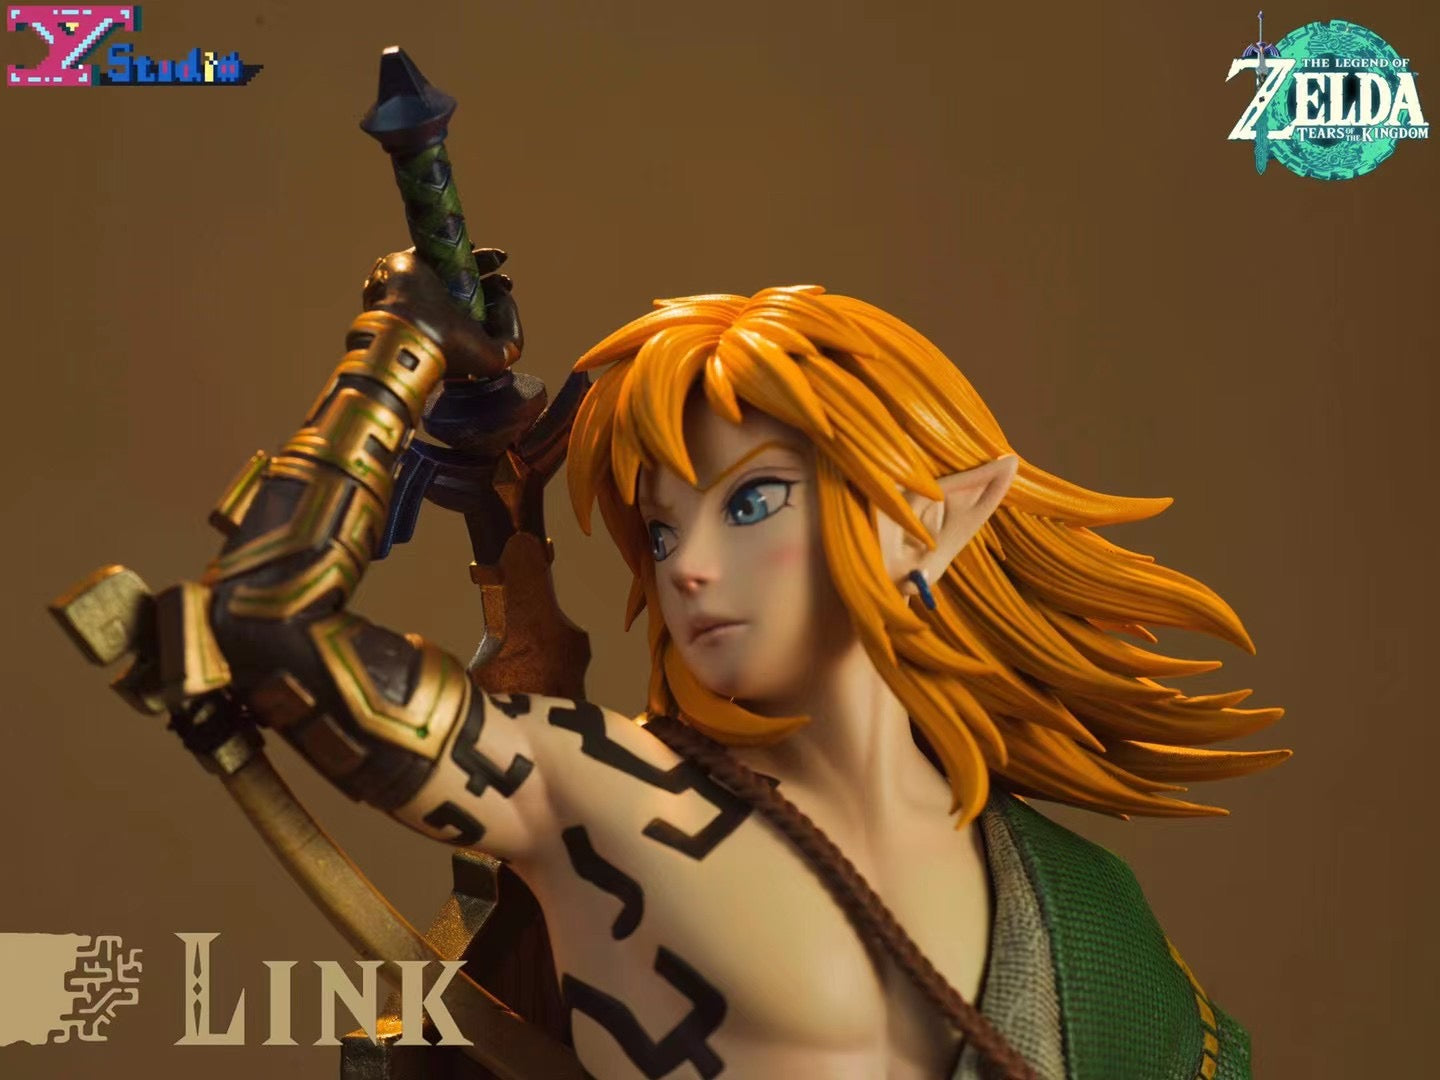 TY Studio - Link The Legend of Zelda Link | 塞尔达传说 林克